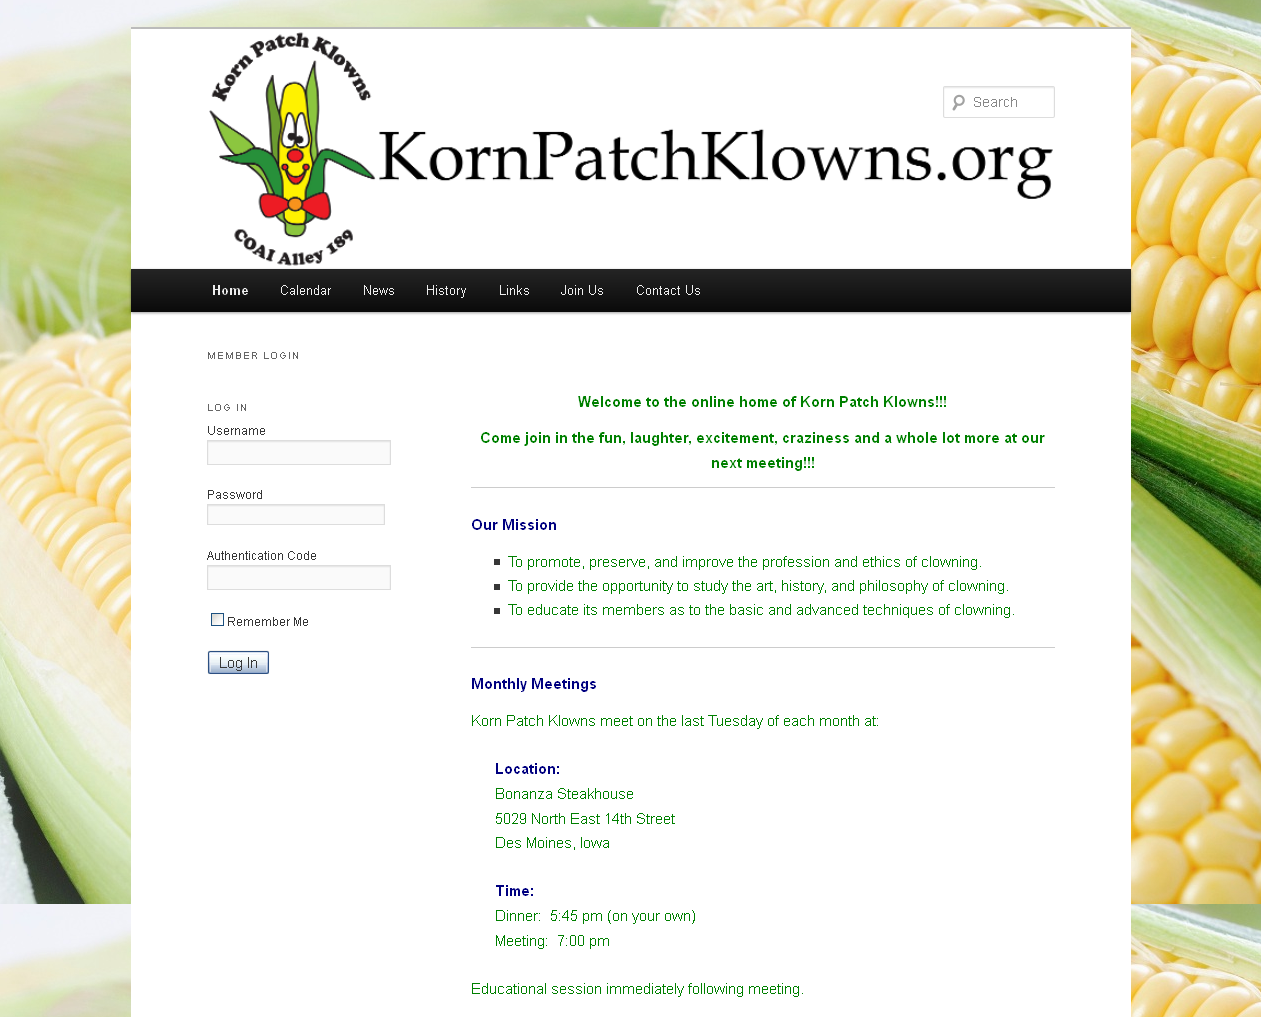 KornPatchKlowns.org